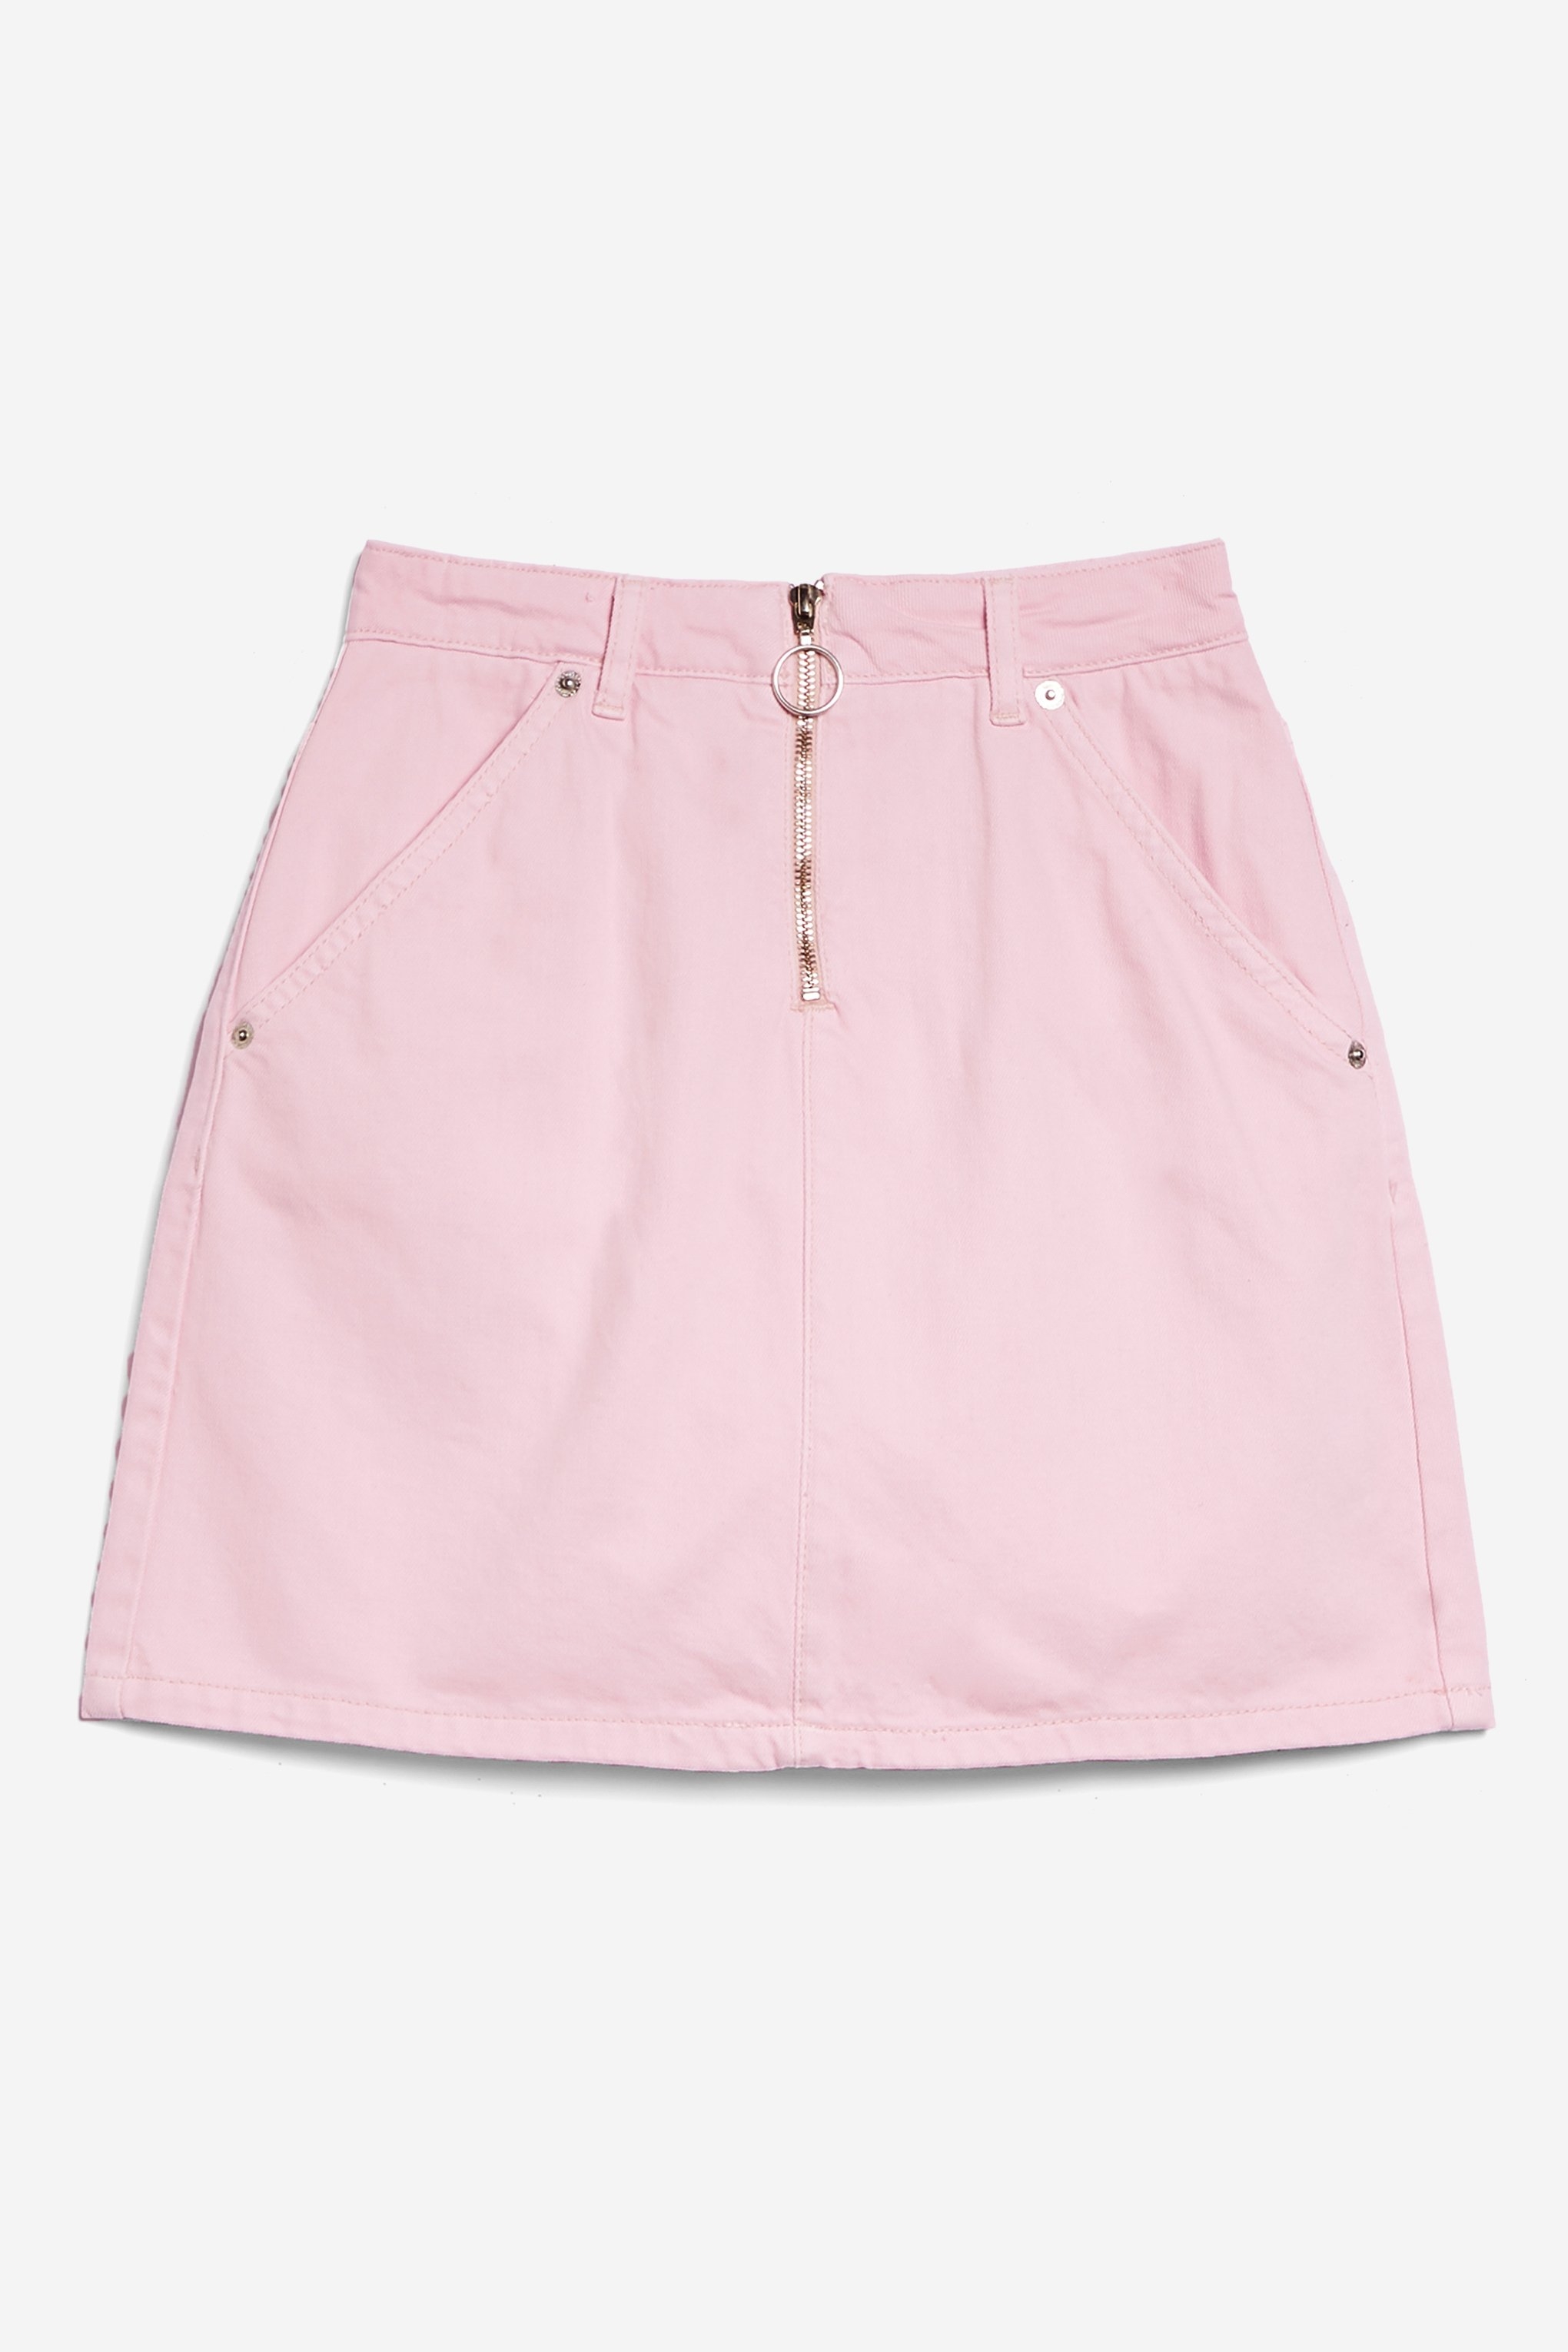 topshop pink denim skirt